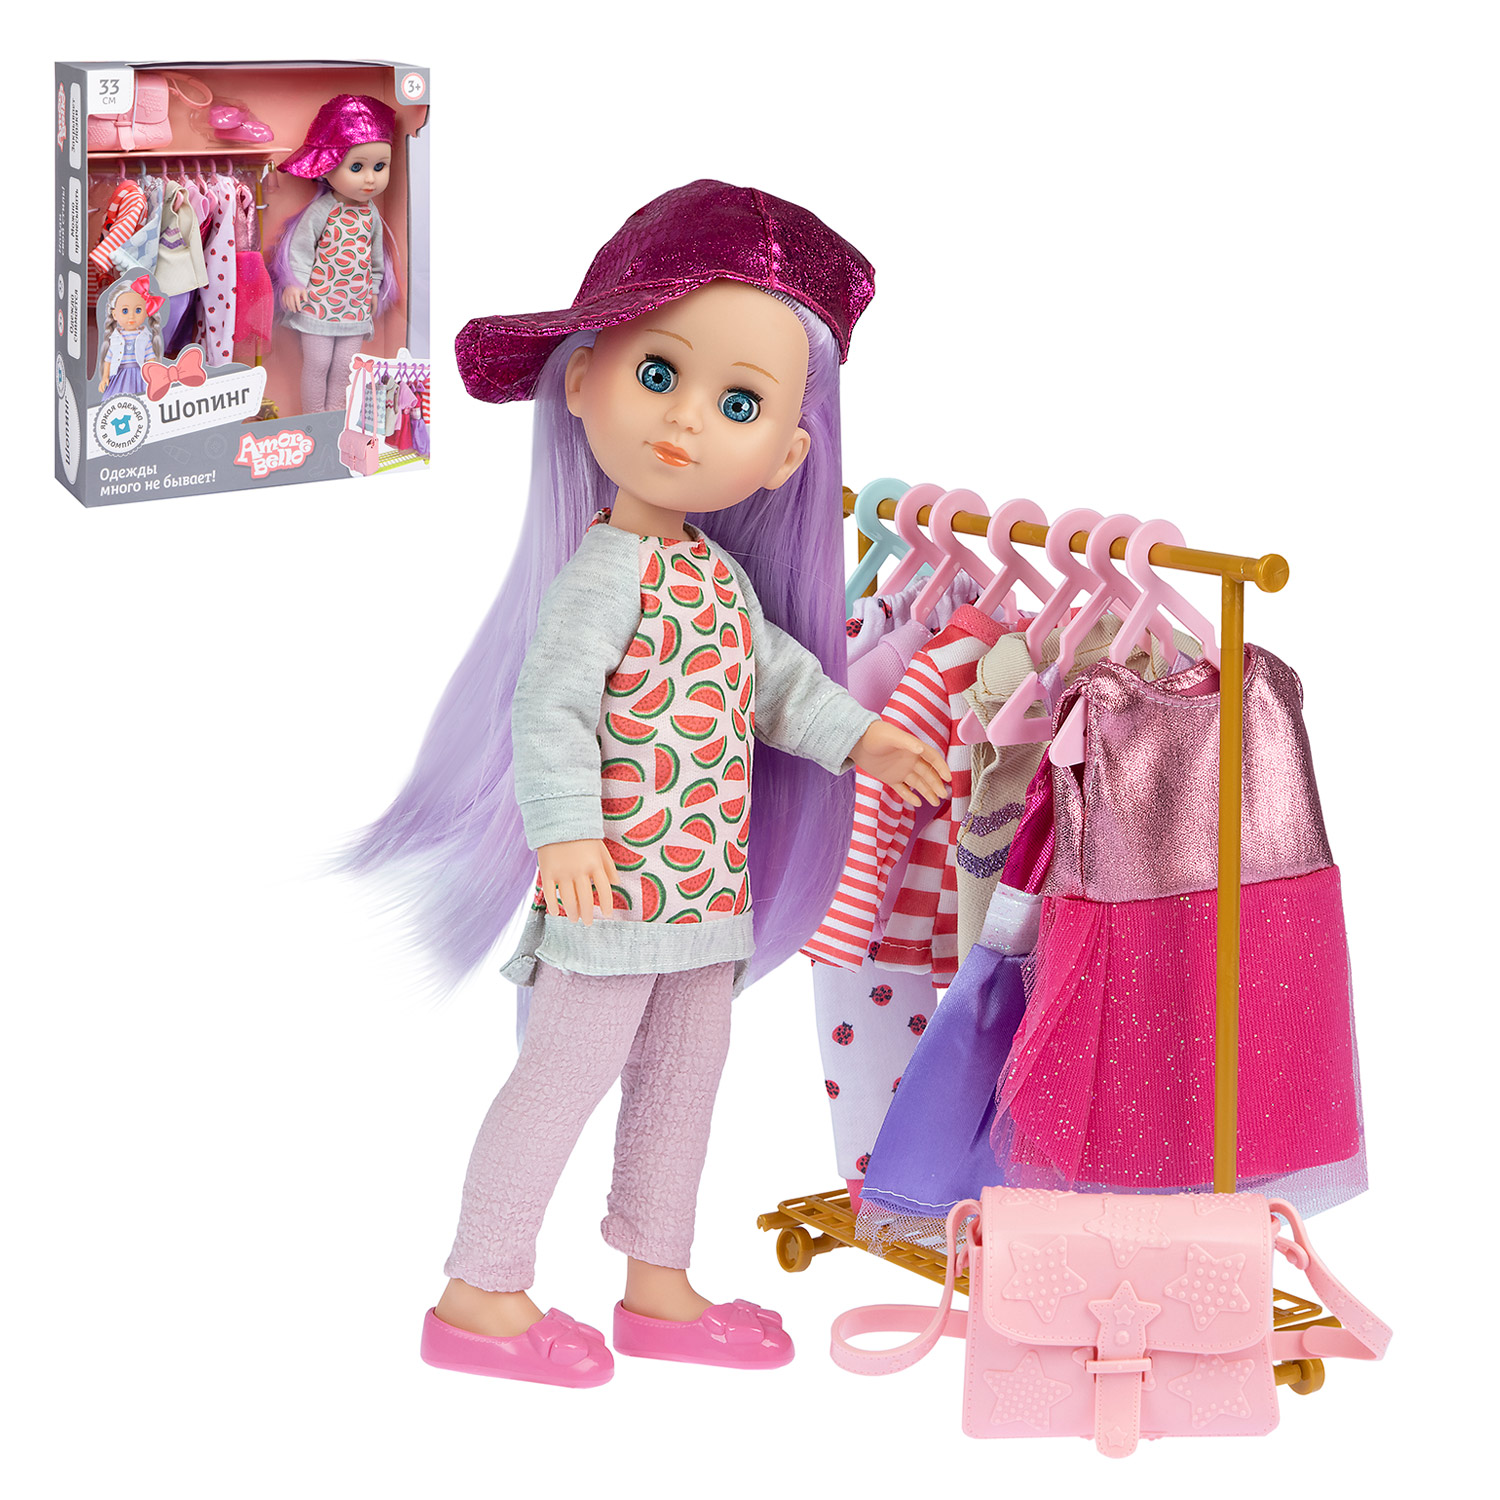 Кукла JB0211475 серия Шопинг с аксессуарами в коробке ТМ Amore Bello - Уфа 